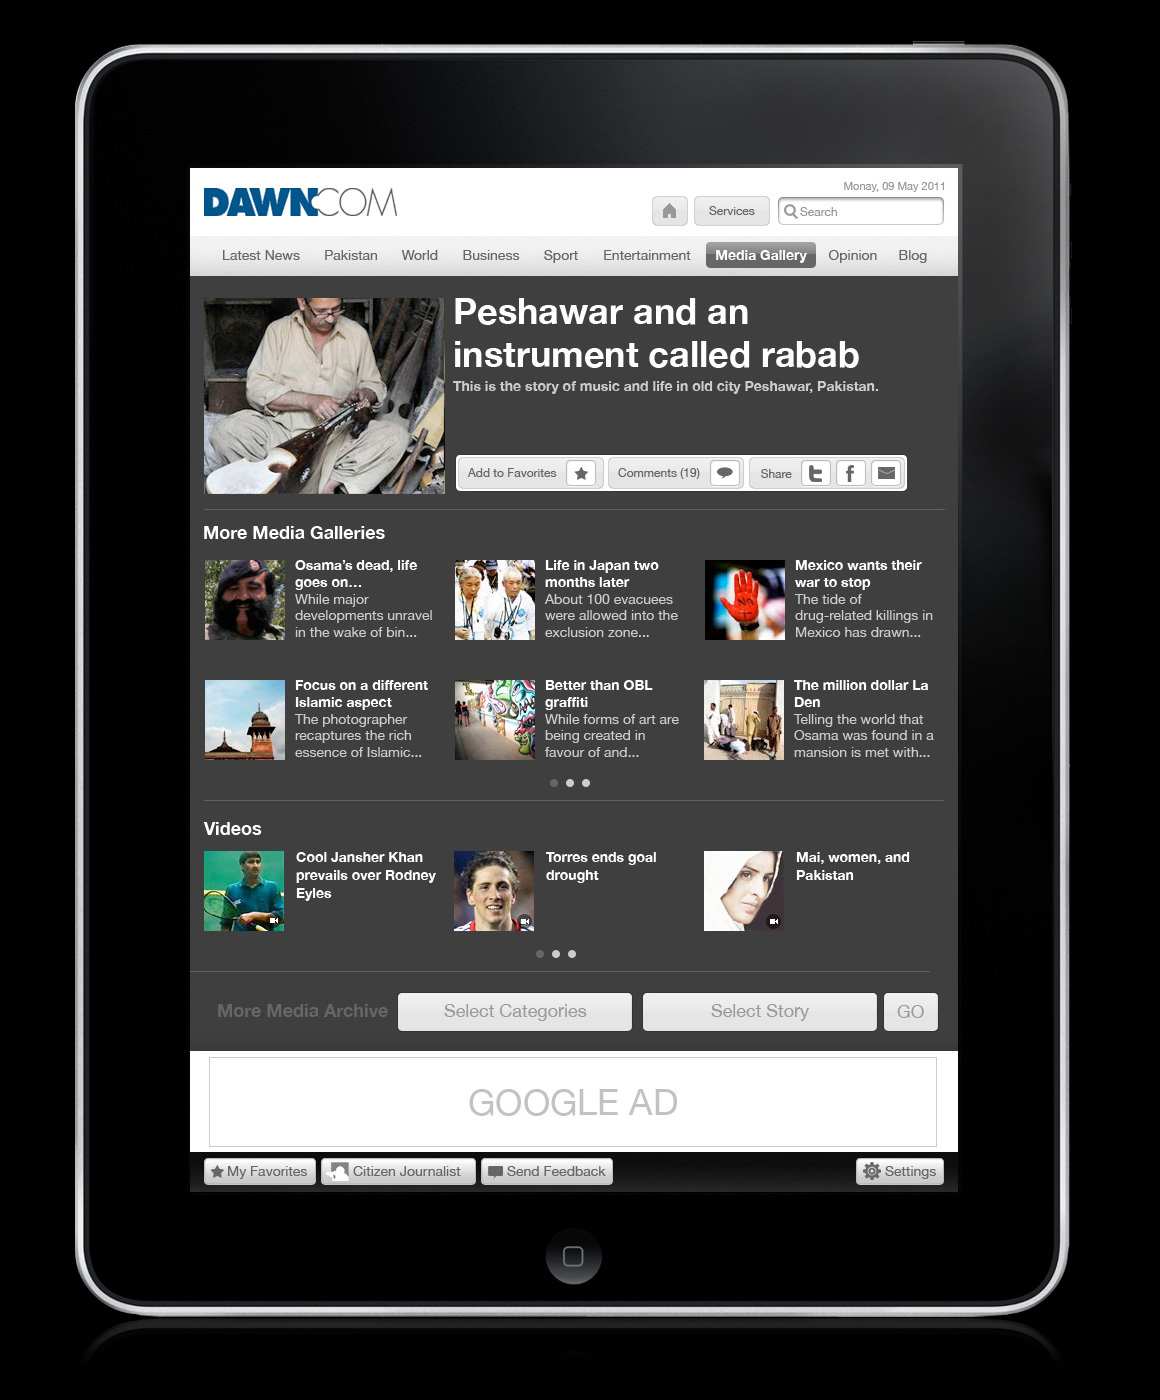 dawn.com DAWN news application Pakistan karachi media iPad iphone android nokia ovi omair virgomair deisgner UI ux